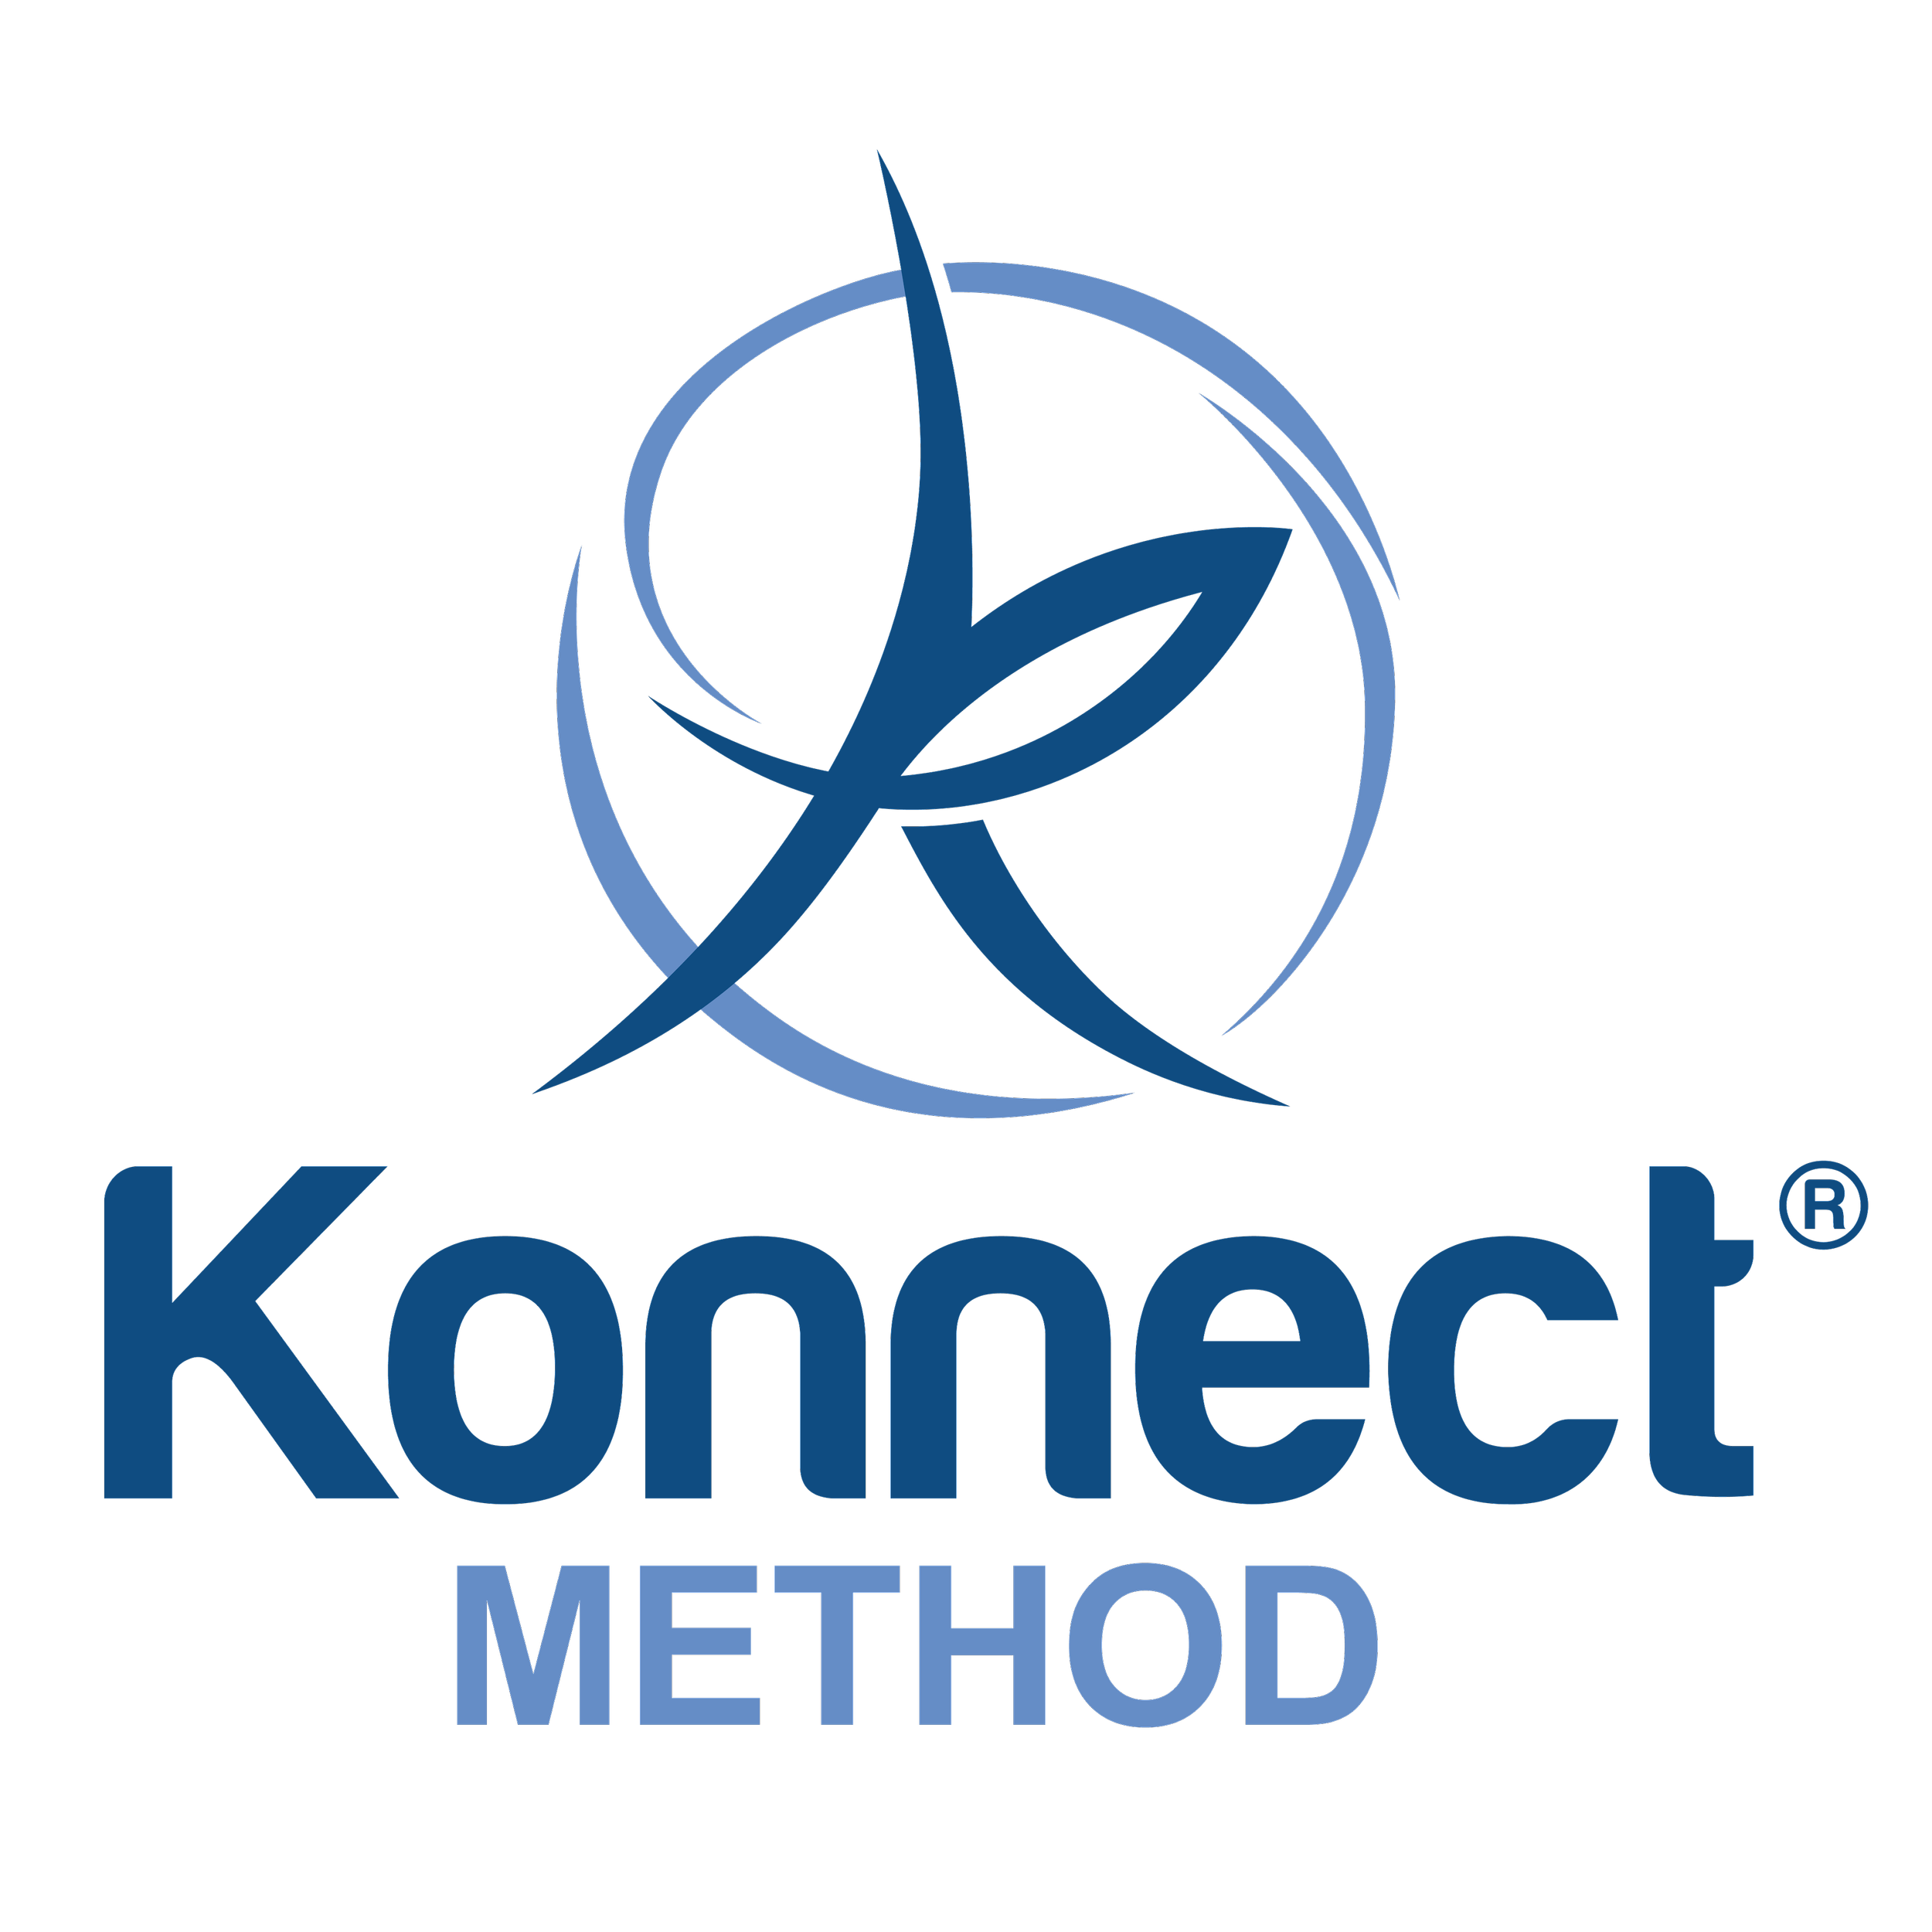 Konnect Method